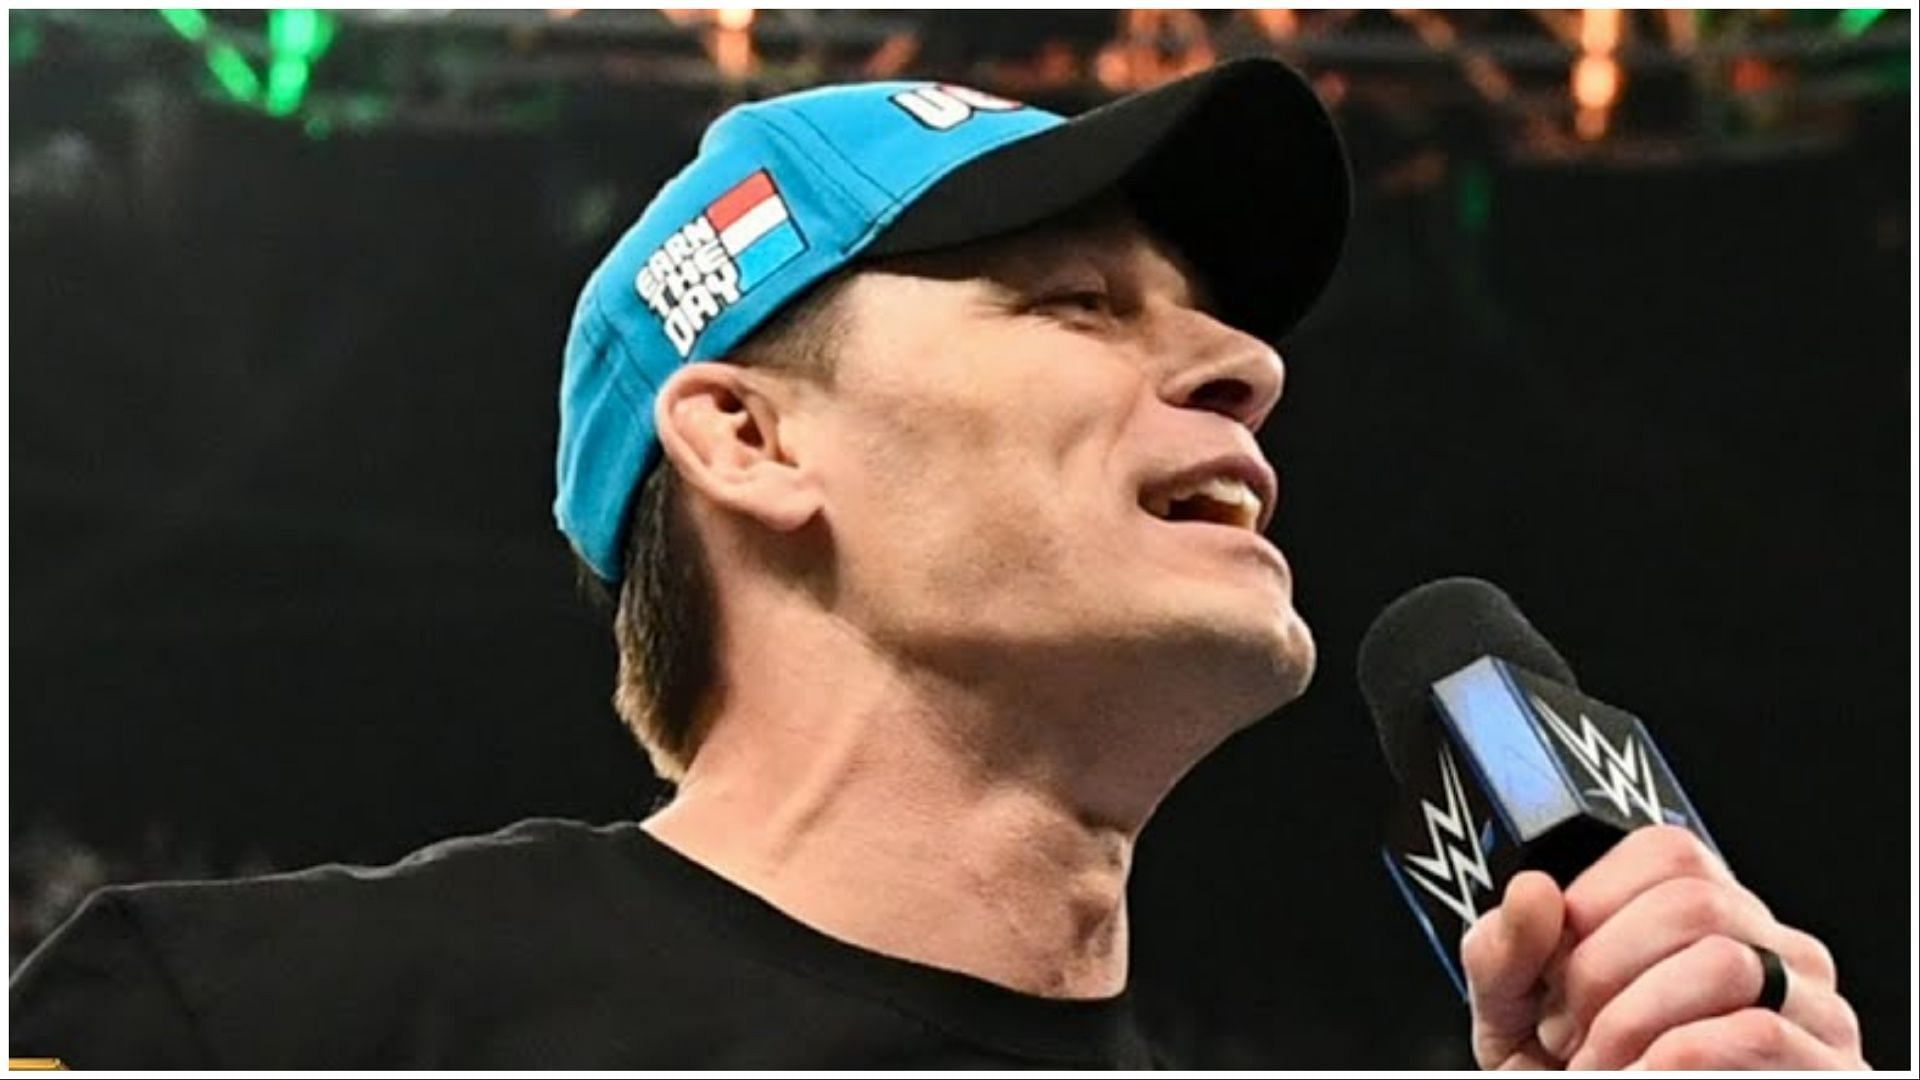 The 16-time world champion and WWE Superstar John Cena